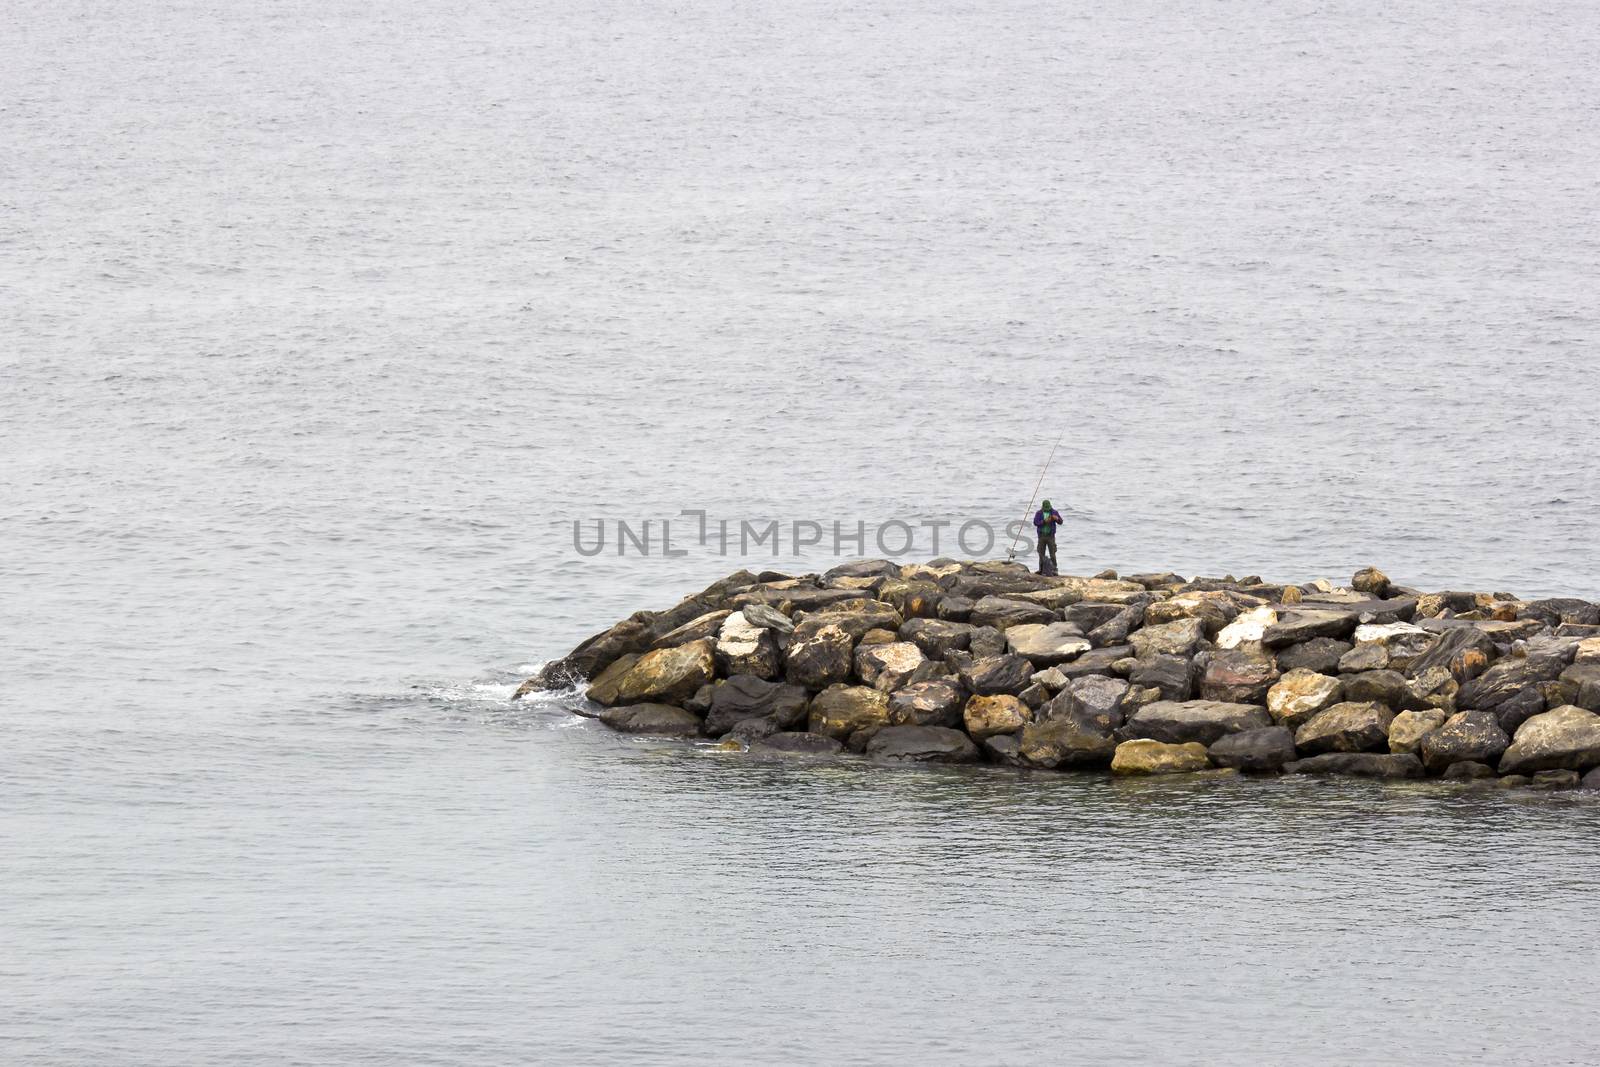 Fisher man with fishing rod on the stone groyne by miradrozdowski